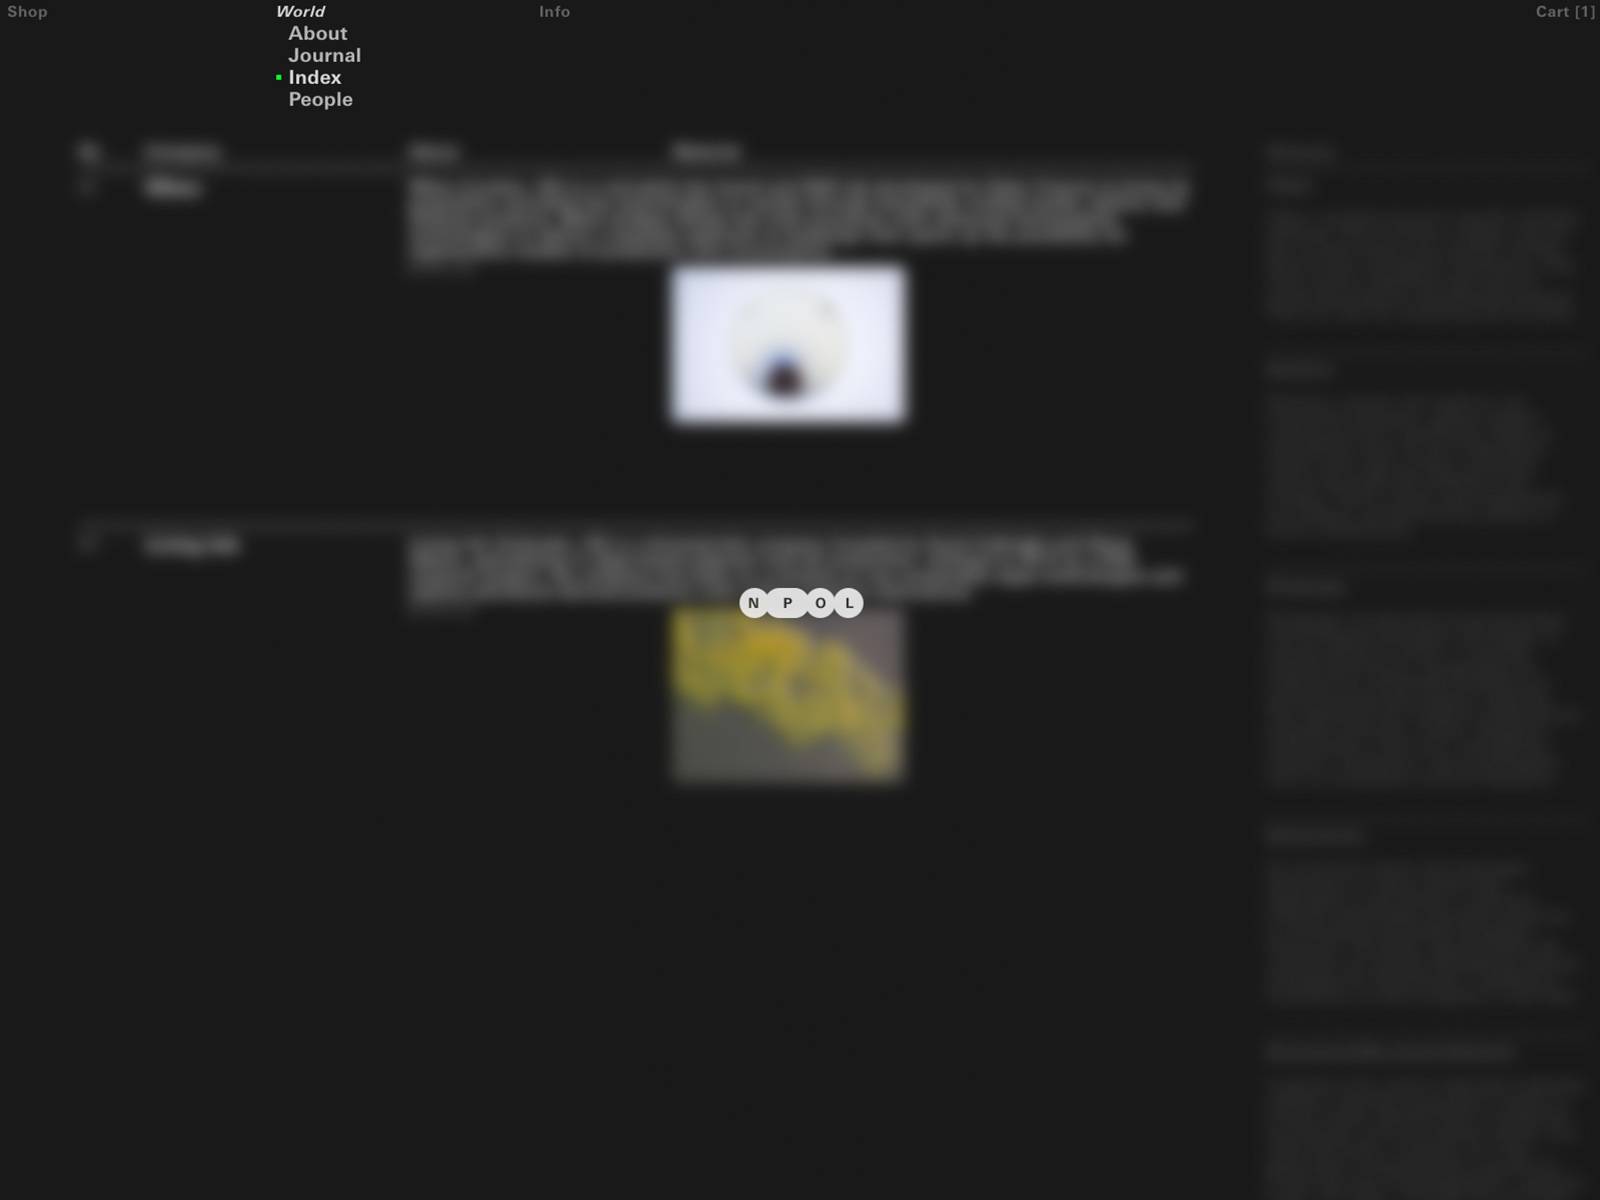 Overlay blur effect on menu